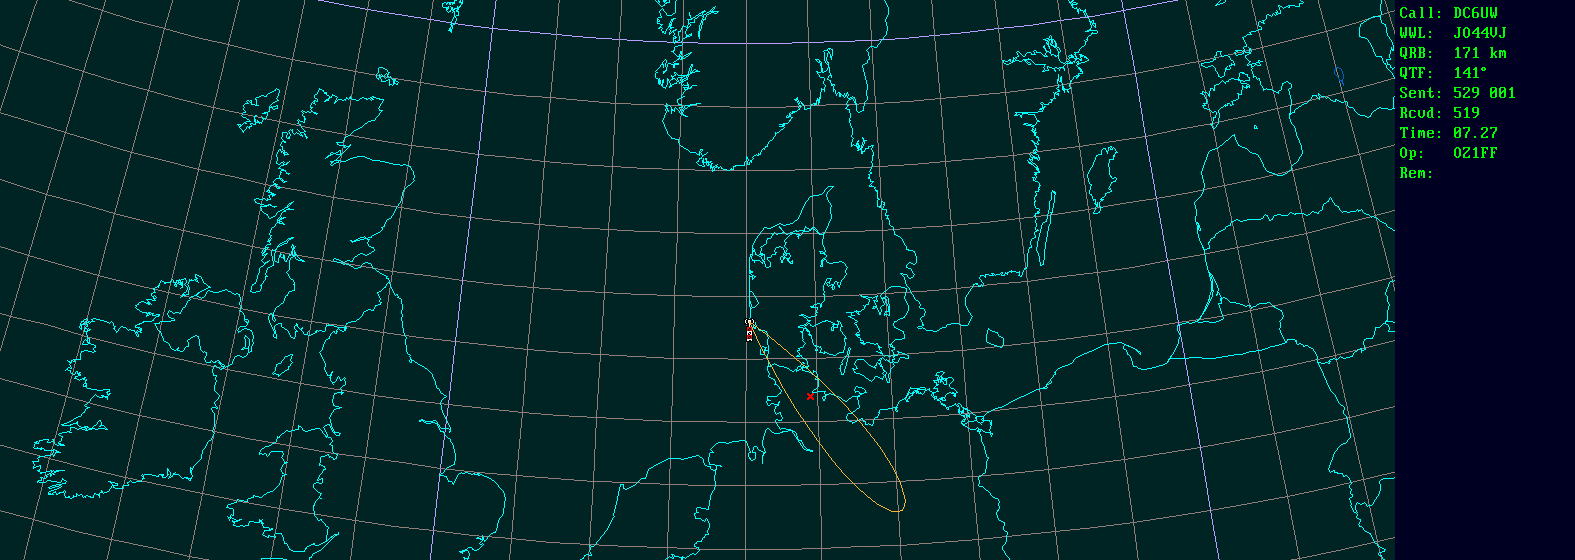 Polar map for 24 GHz